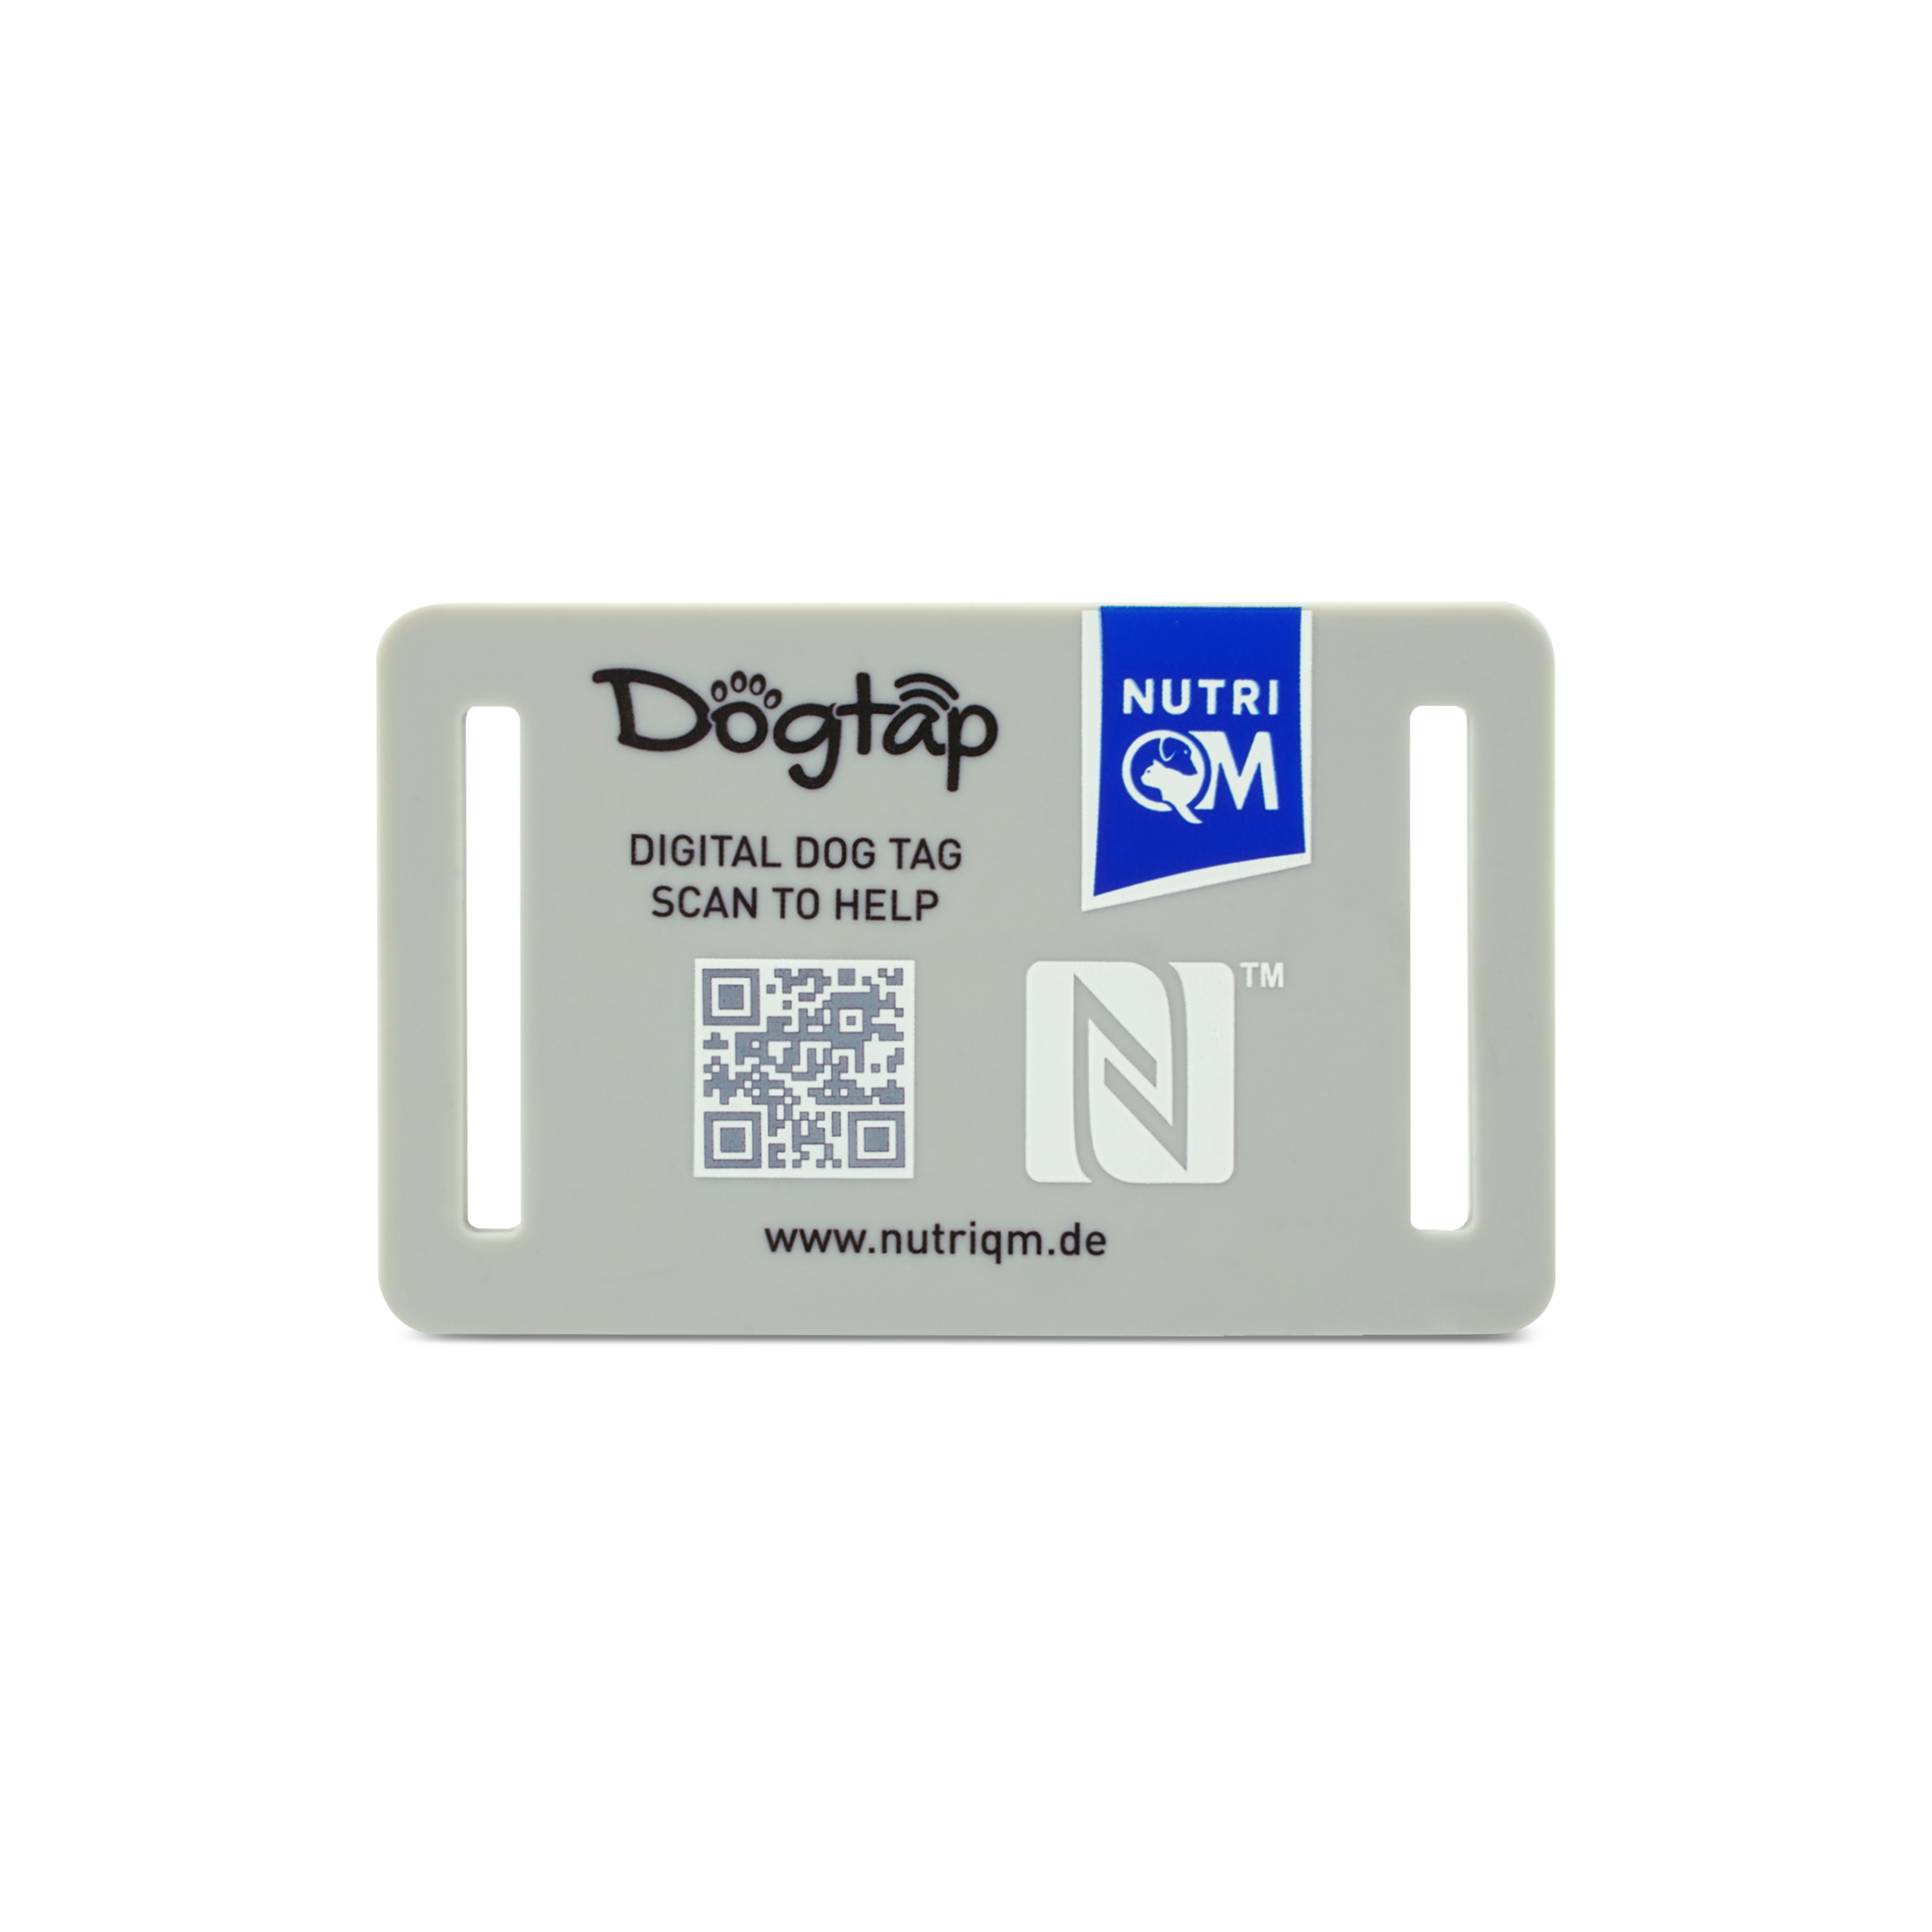 Dogtap Light Big - Digitale Hundemarke - Silikon - 67 x 40 mm - grau - NutriQM